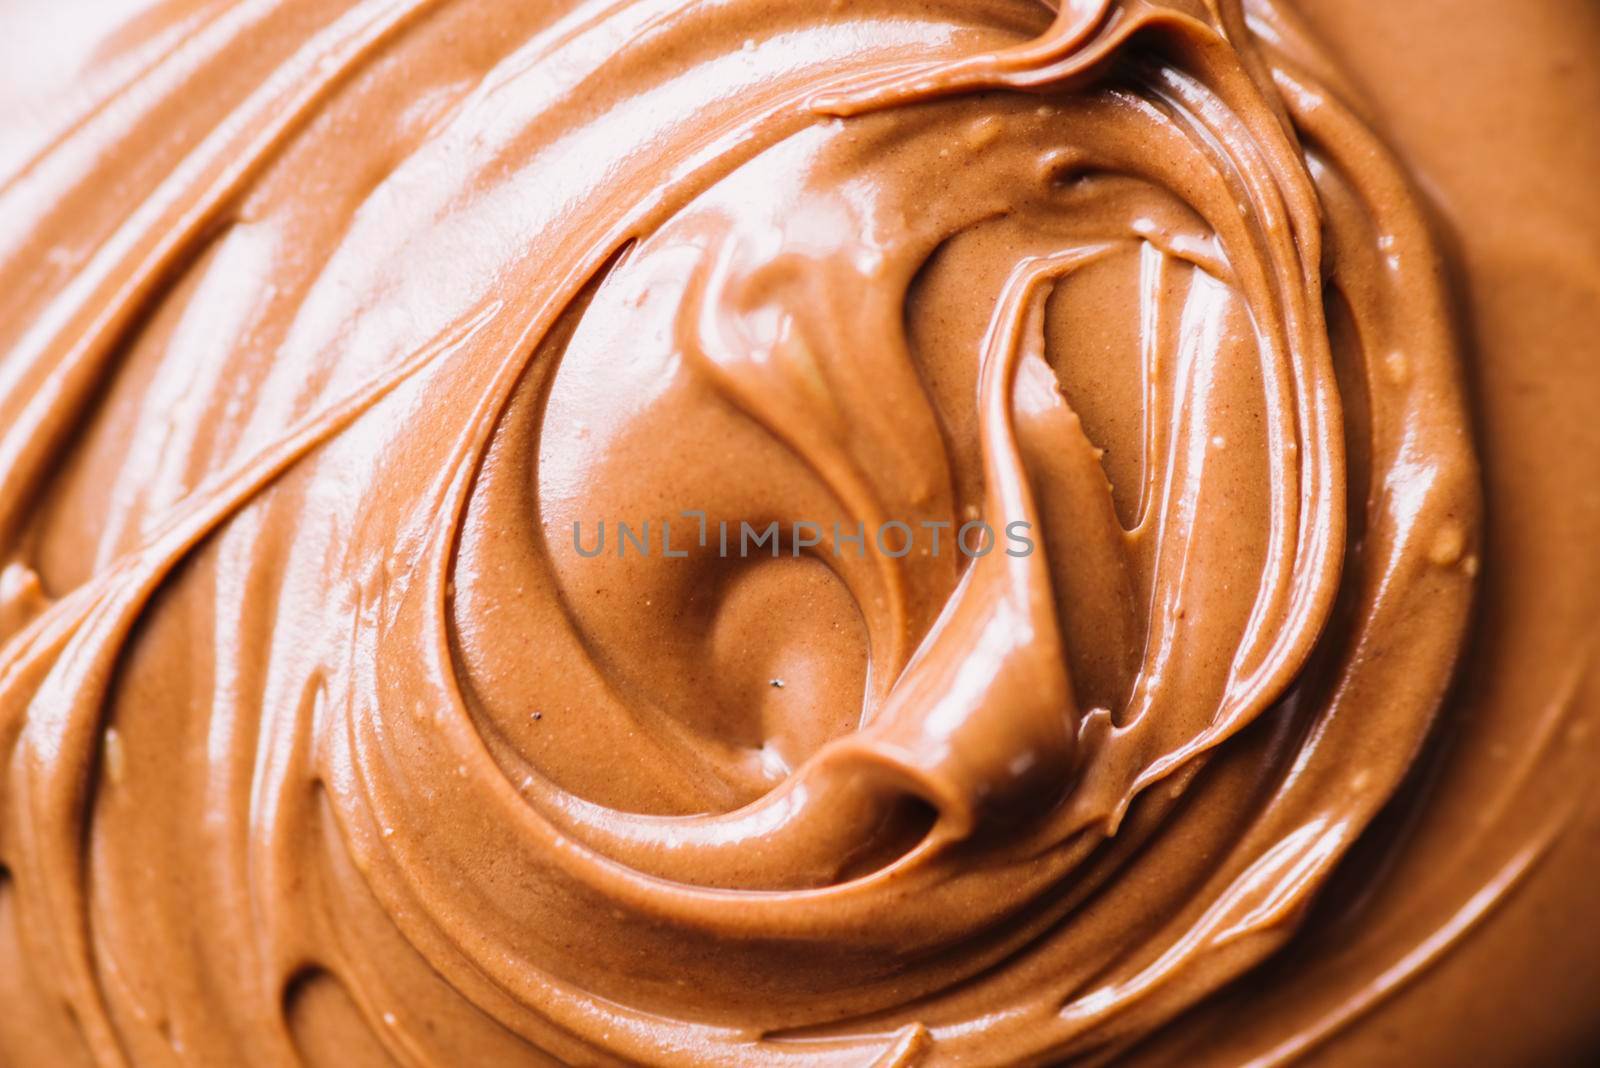 melted chocolate swirl background by Zahard